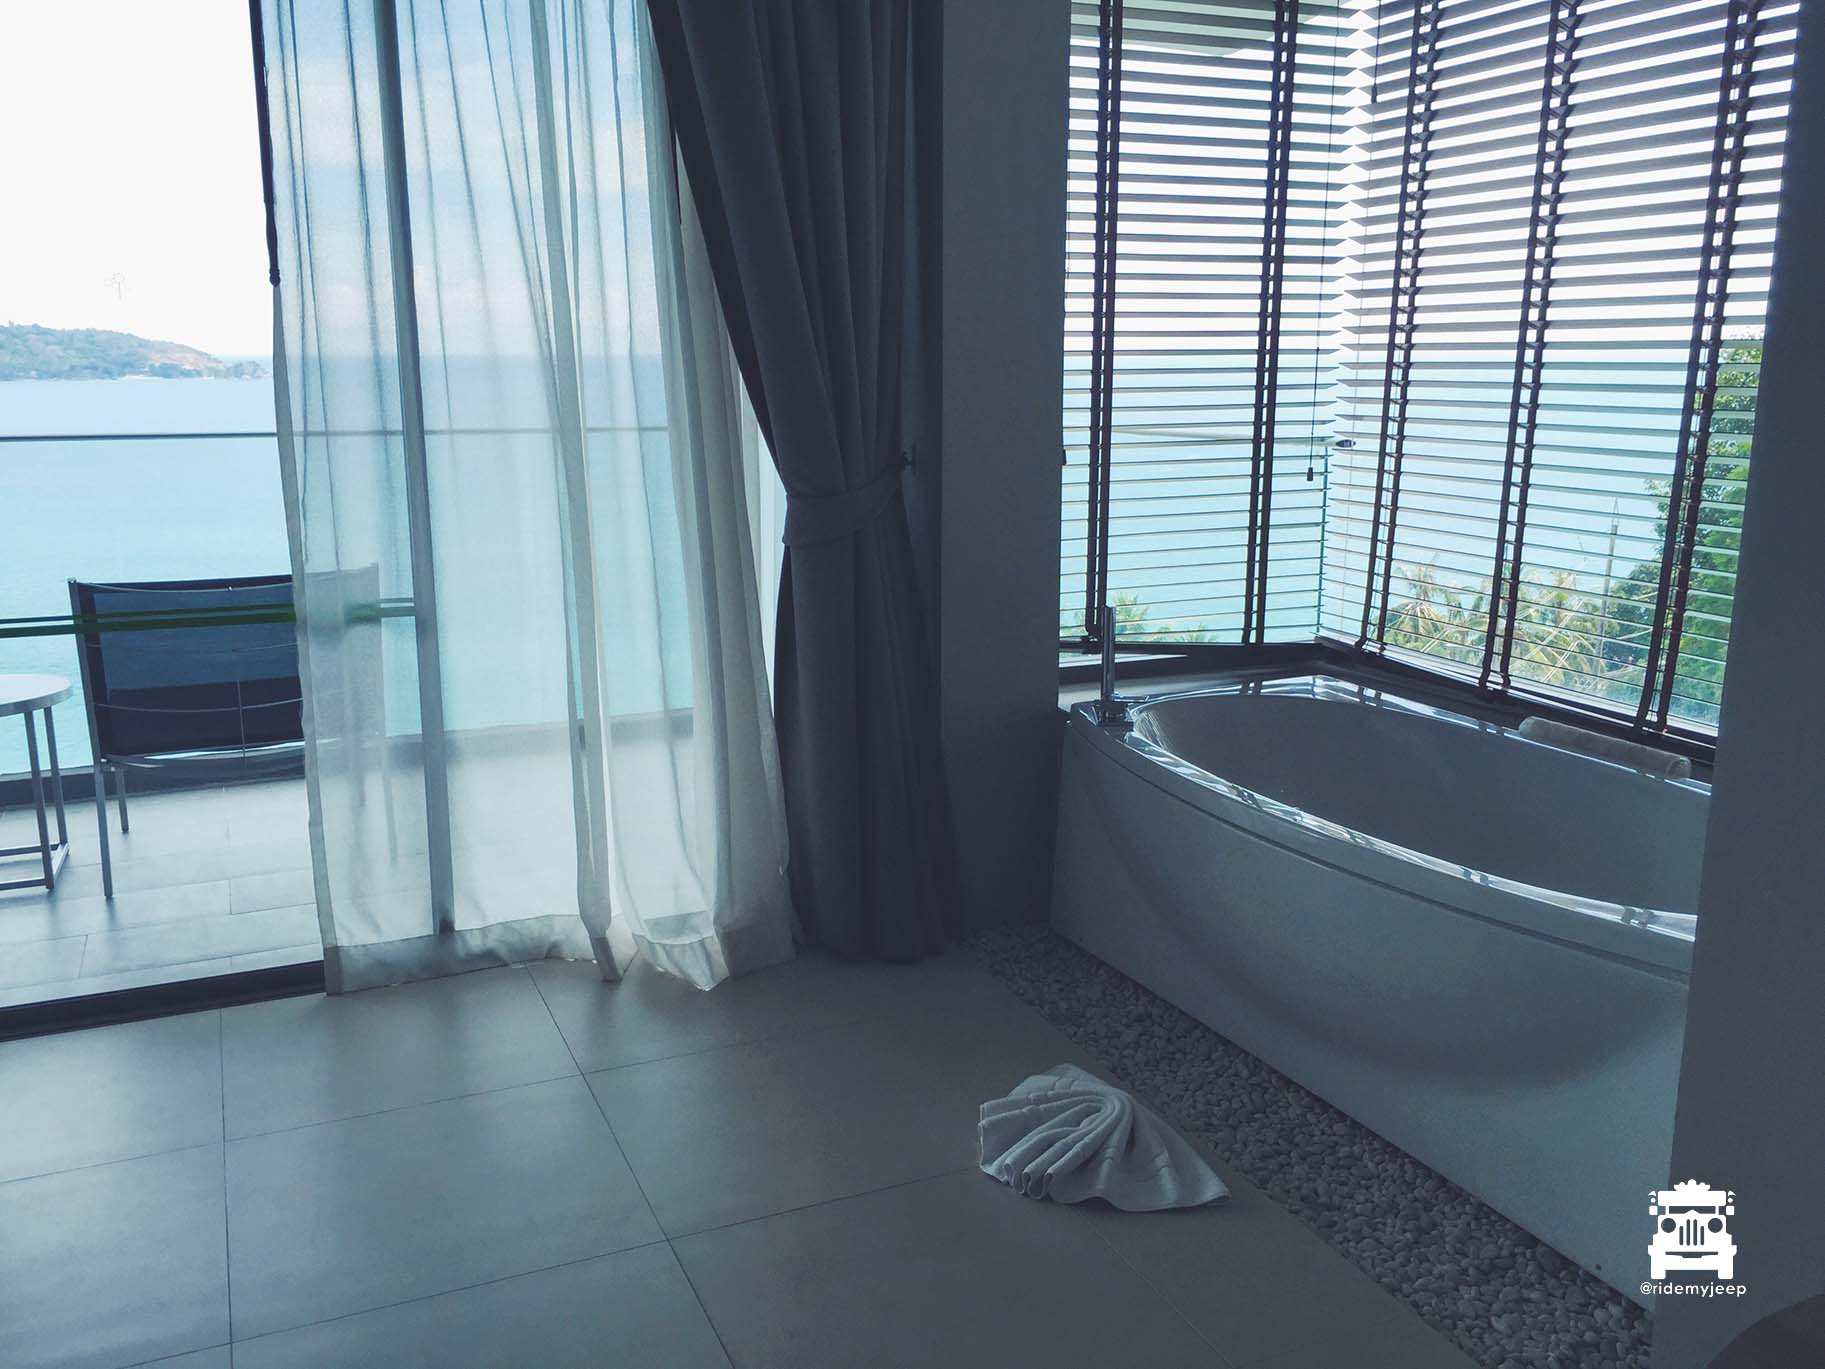 That bathtub view